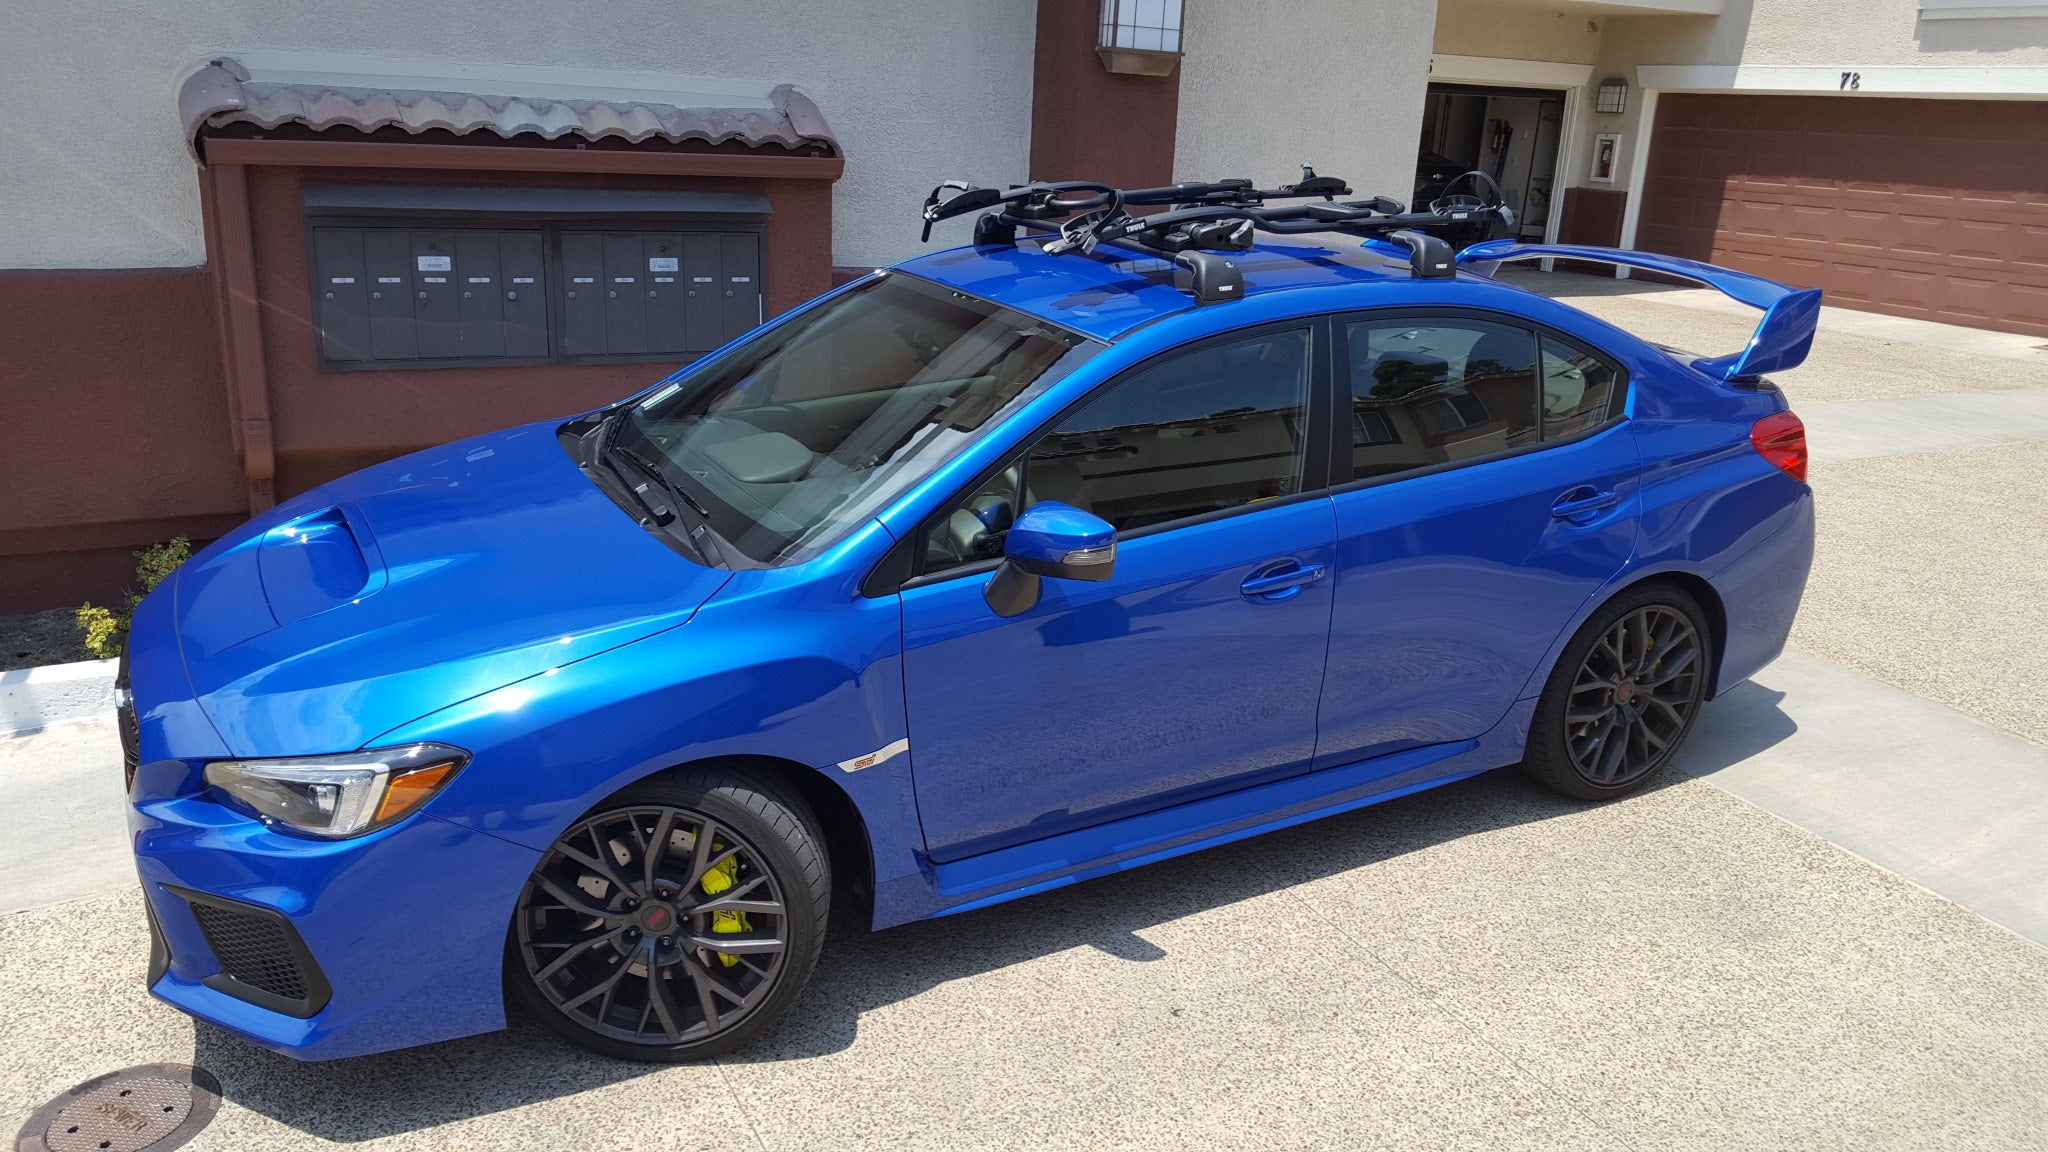 Subaru Thule Roof Rack Crossbar Set Fixed Style